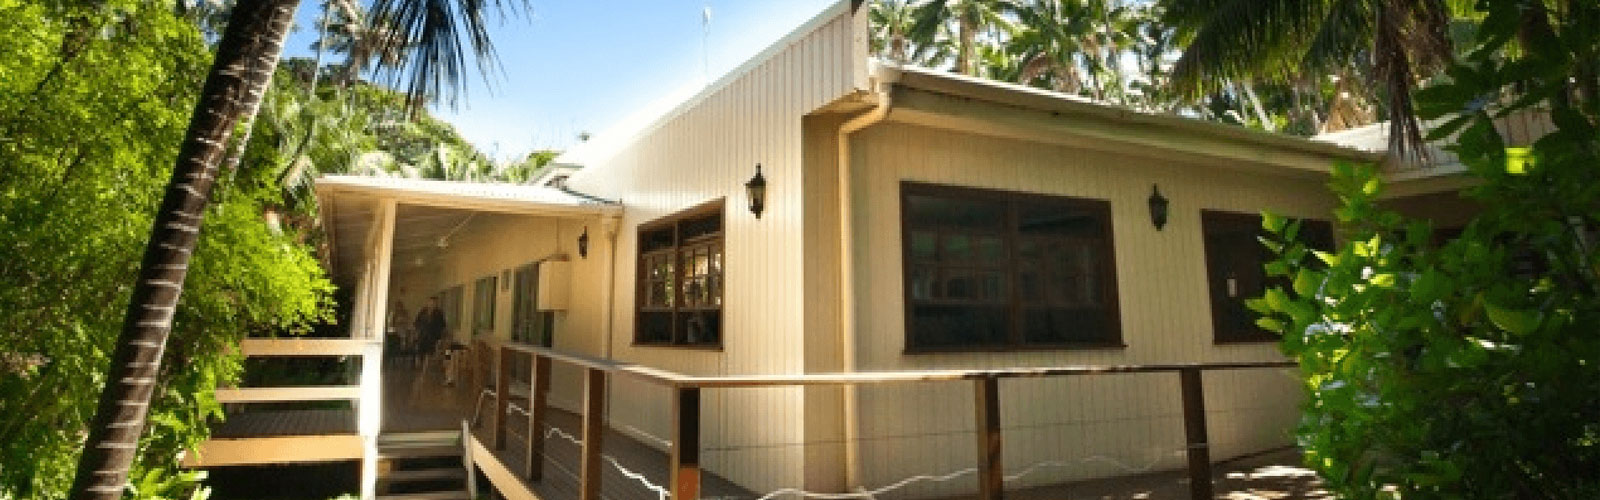 Beachcomber Lodge, Lord Howe Island